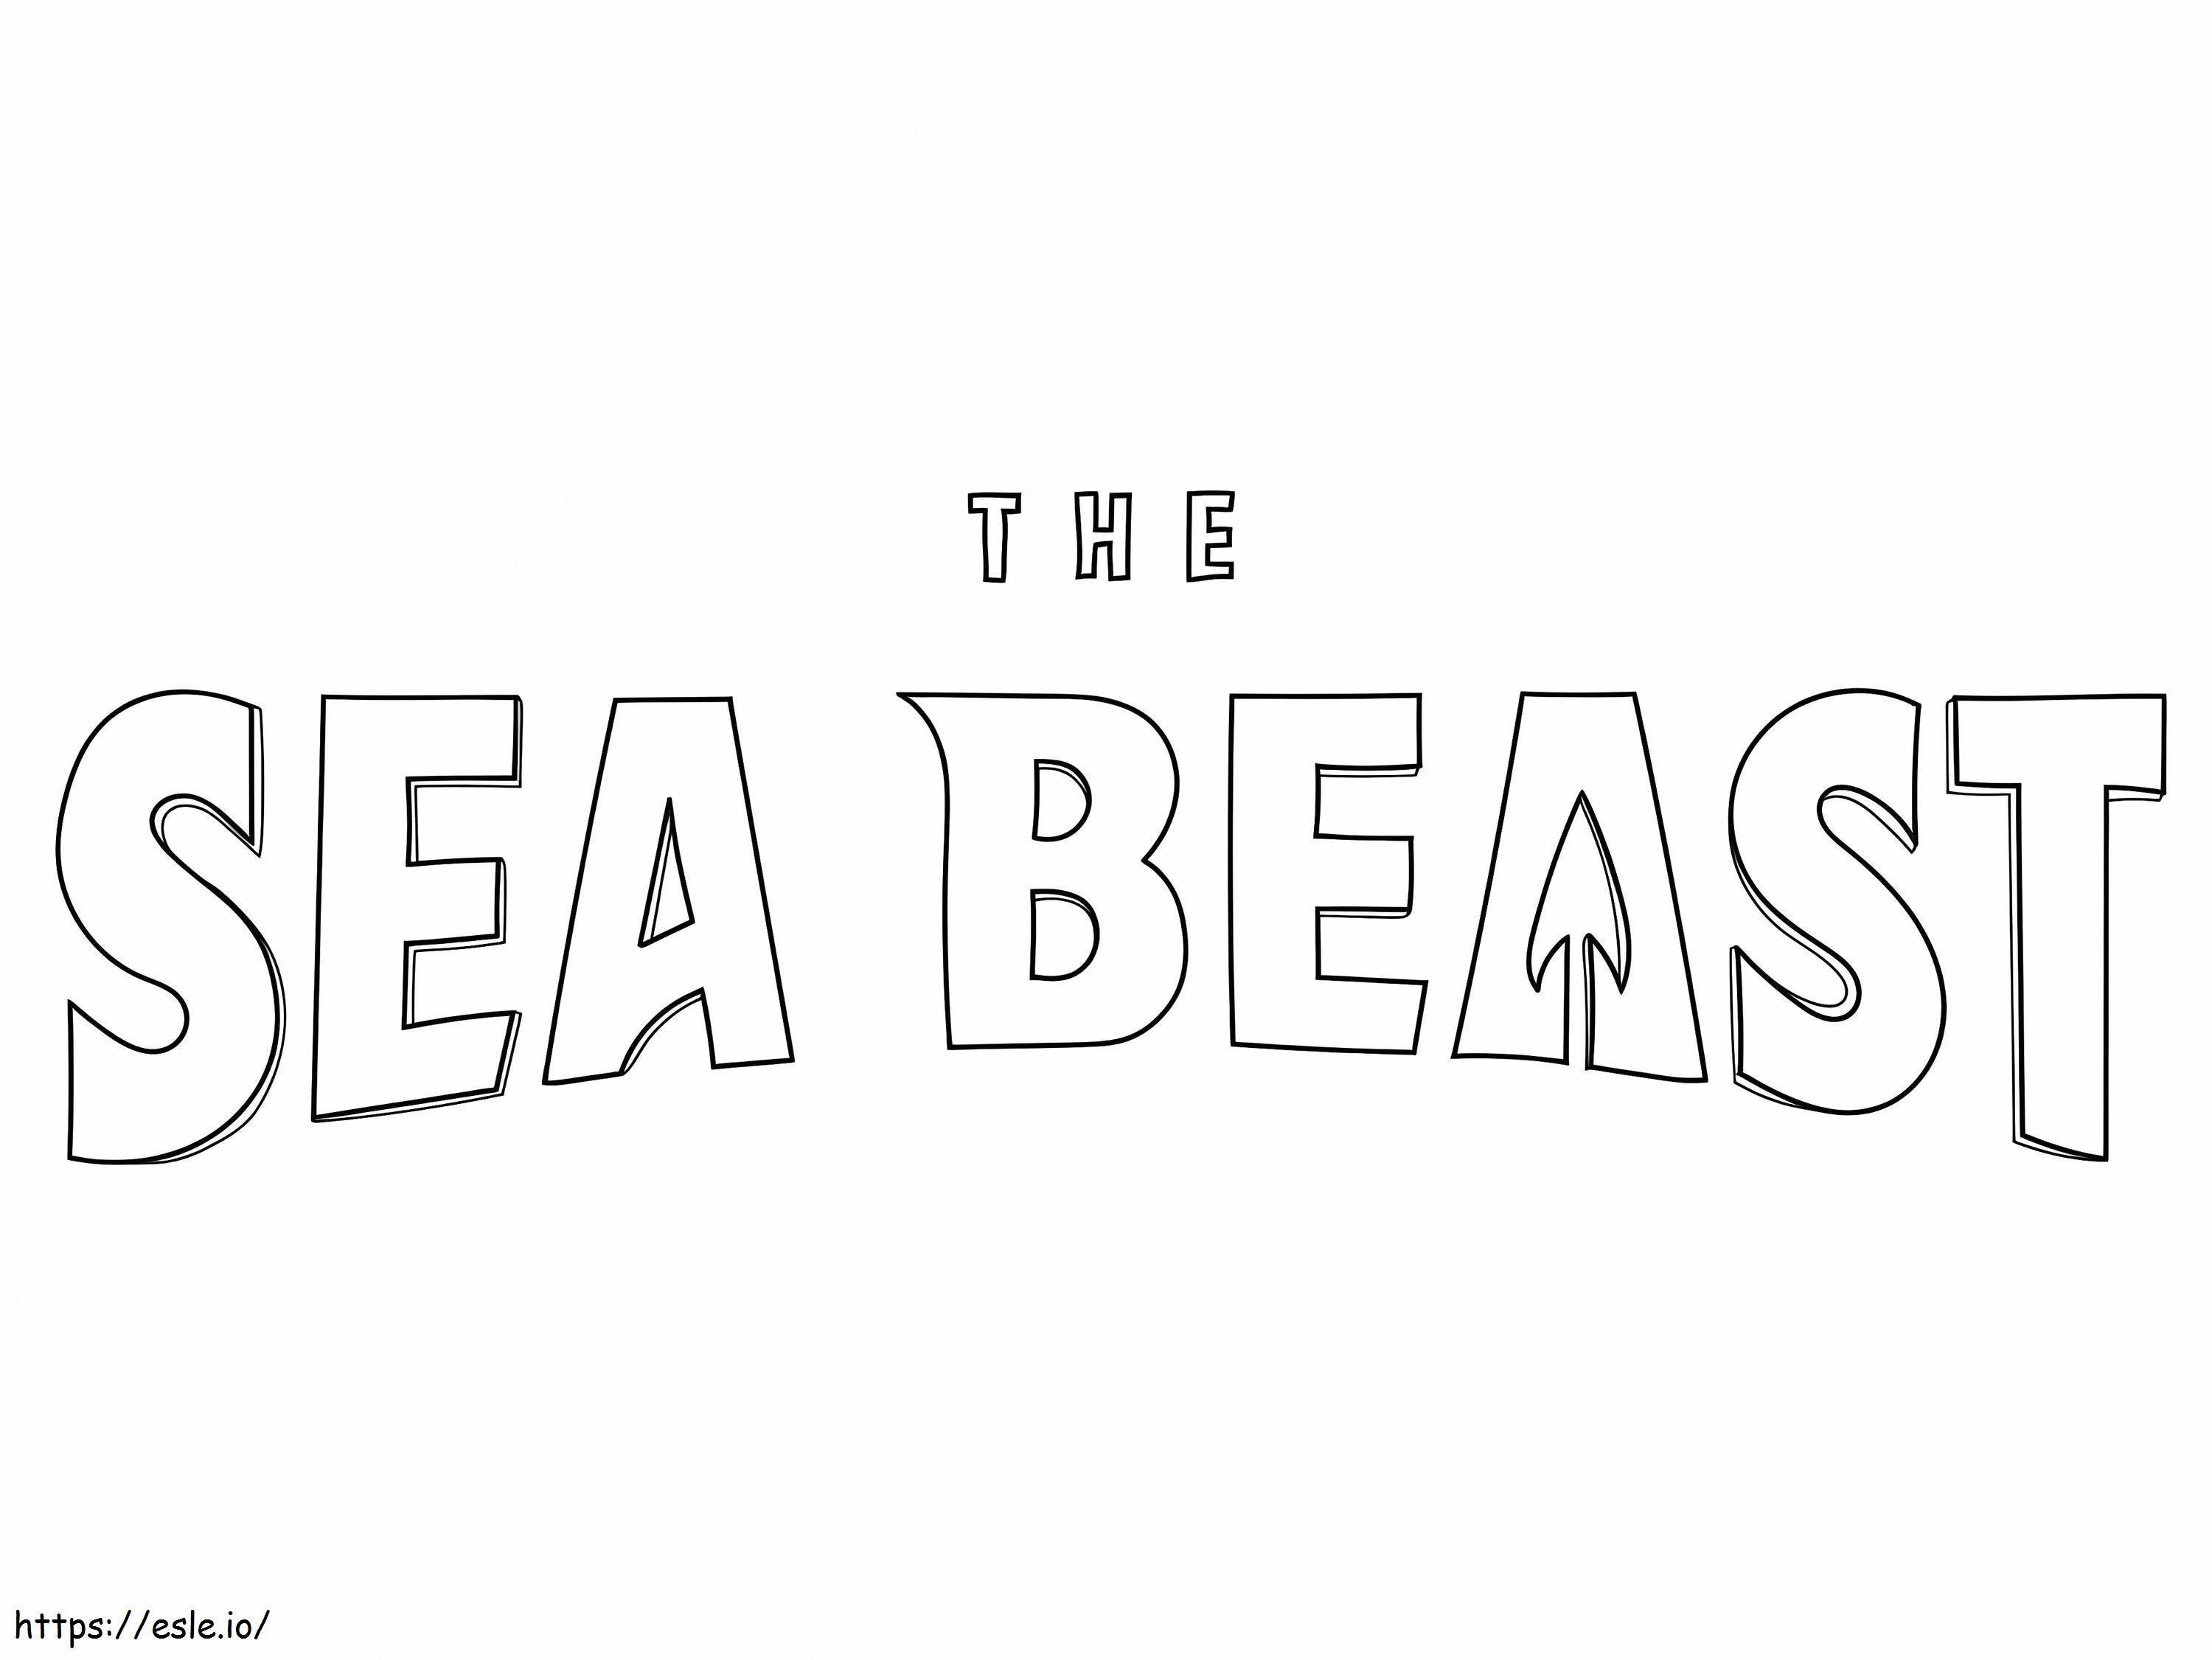 Das Sea Beast-Logo ausmalbilder